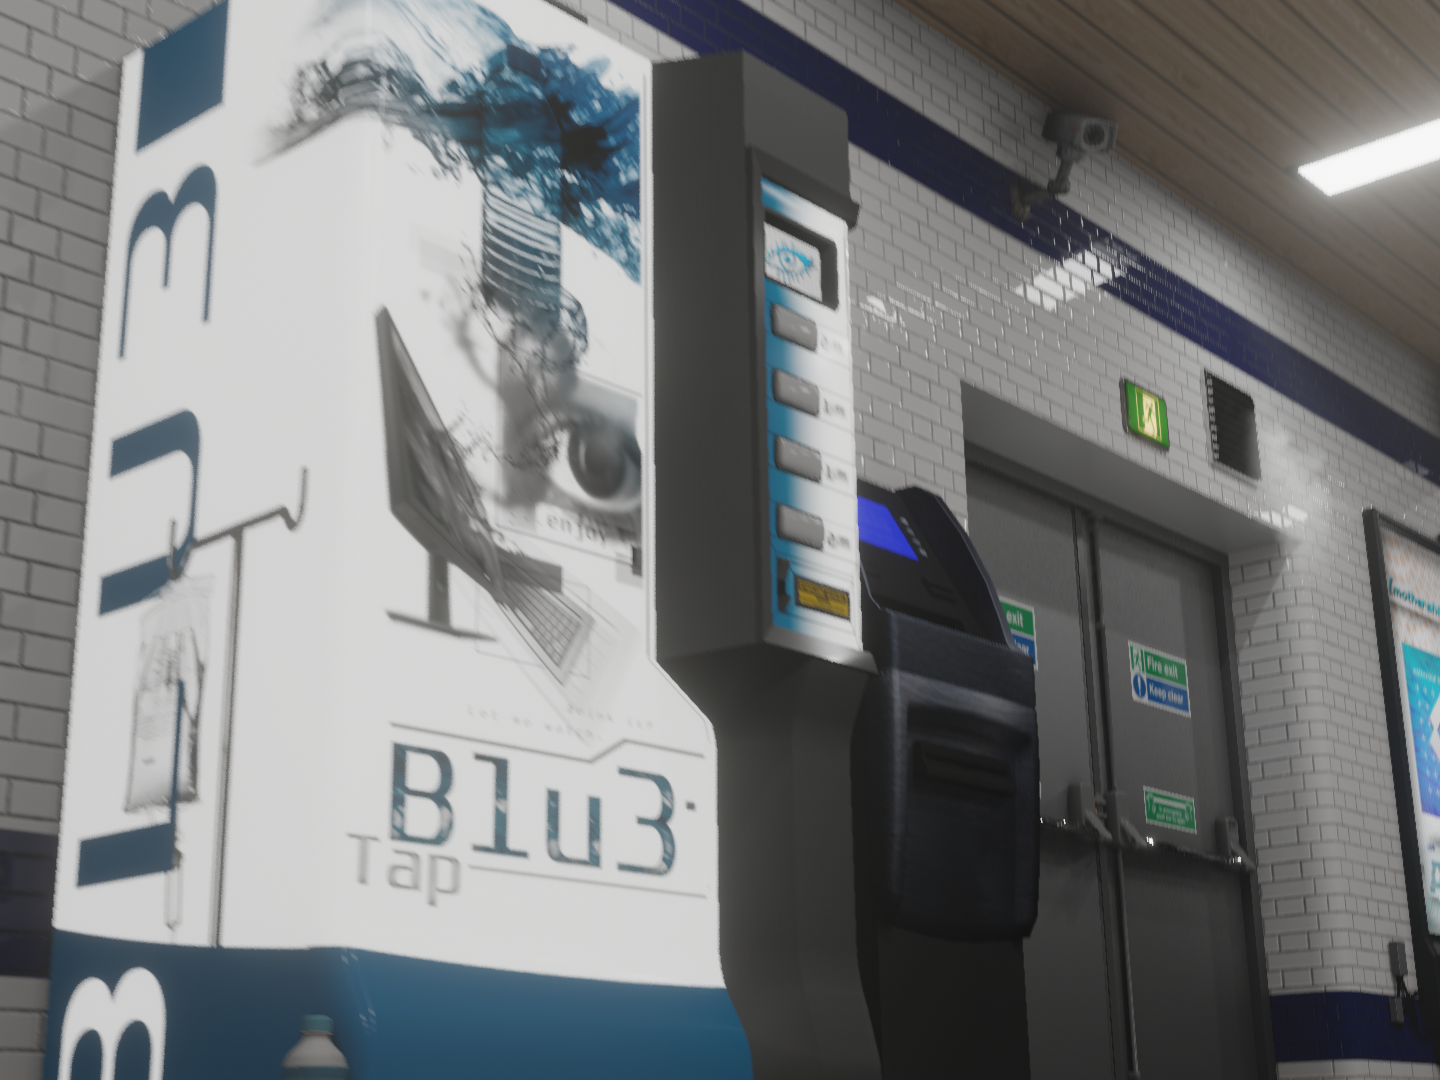 Blue Vending Machine preview image 2